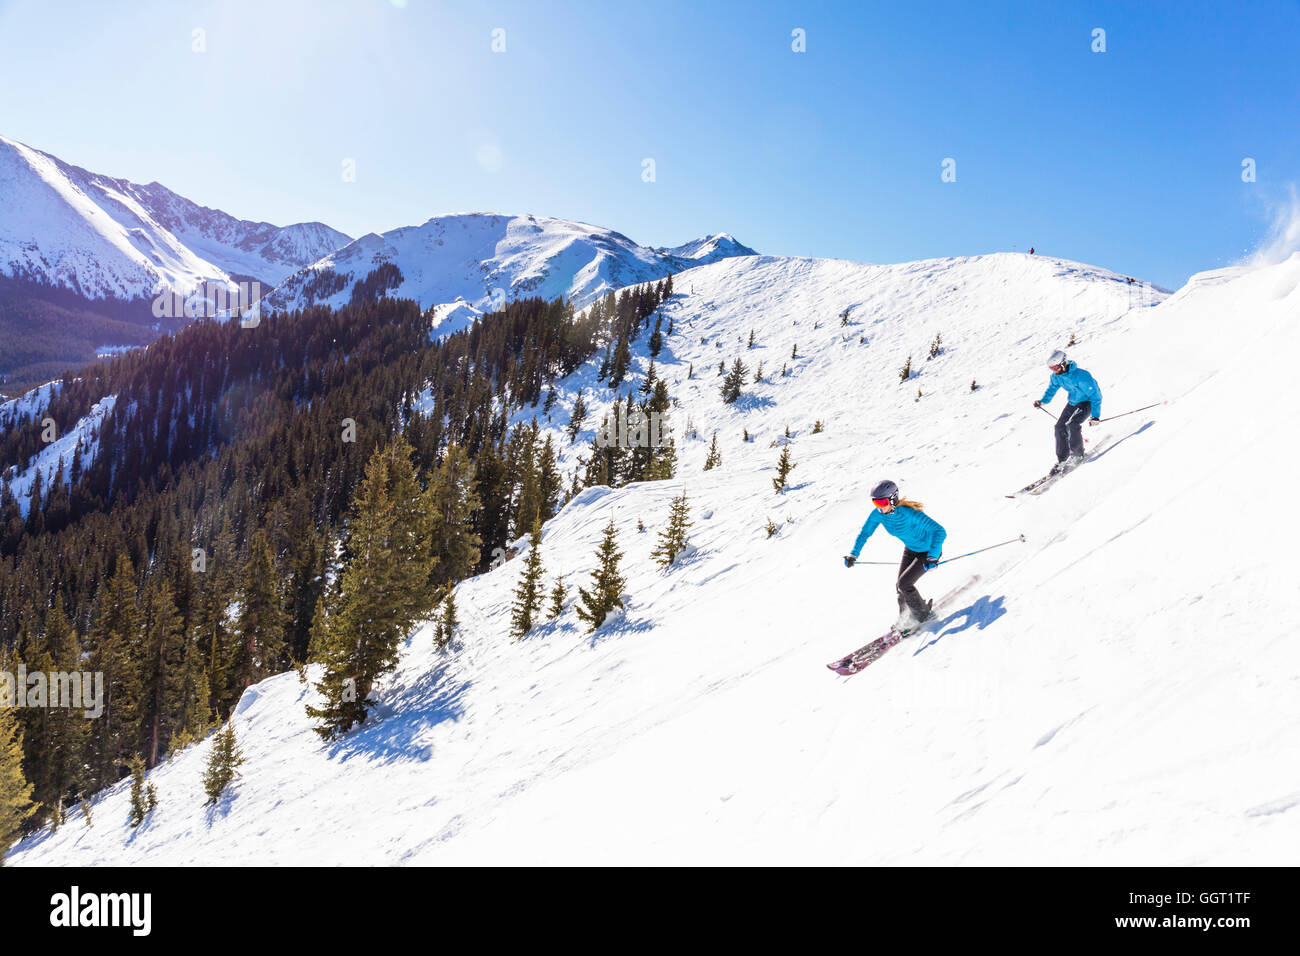 Couple skiing on snowy mountain slope Stock Photo